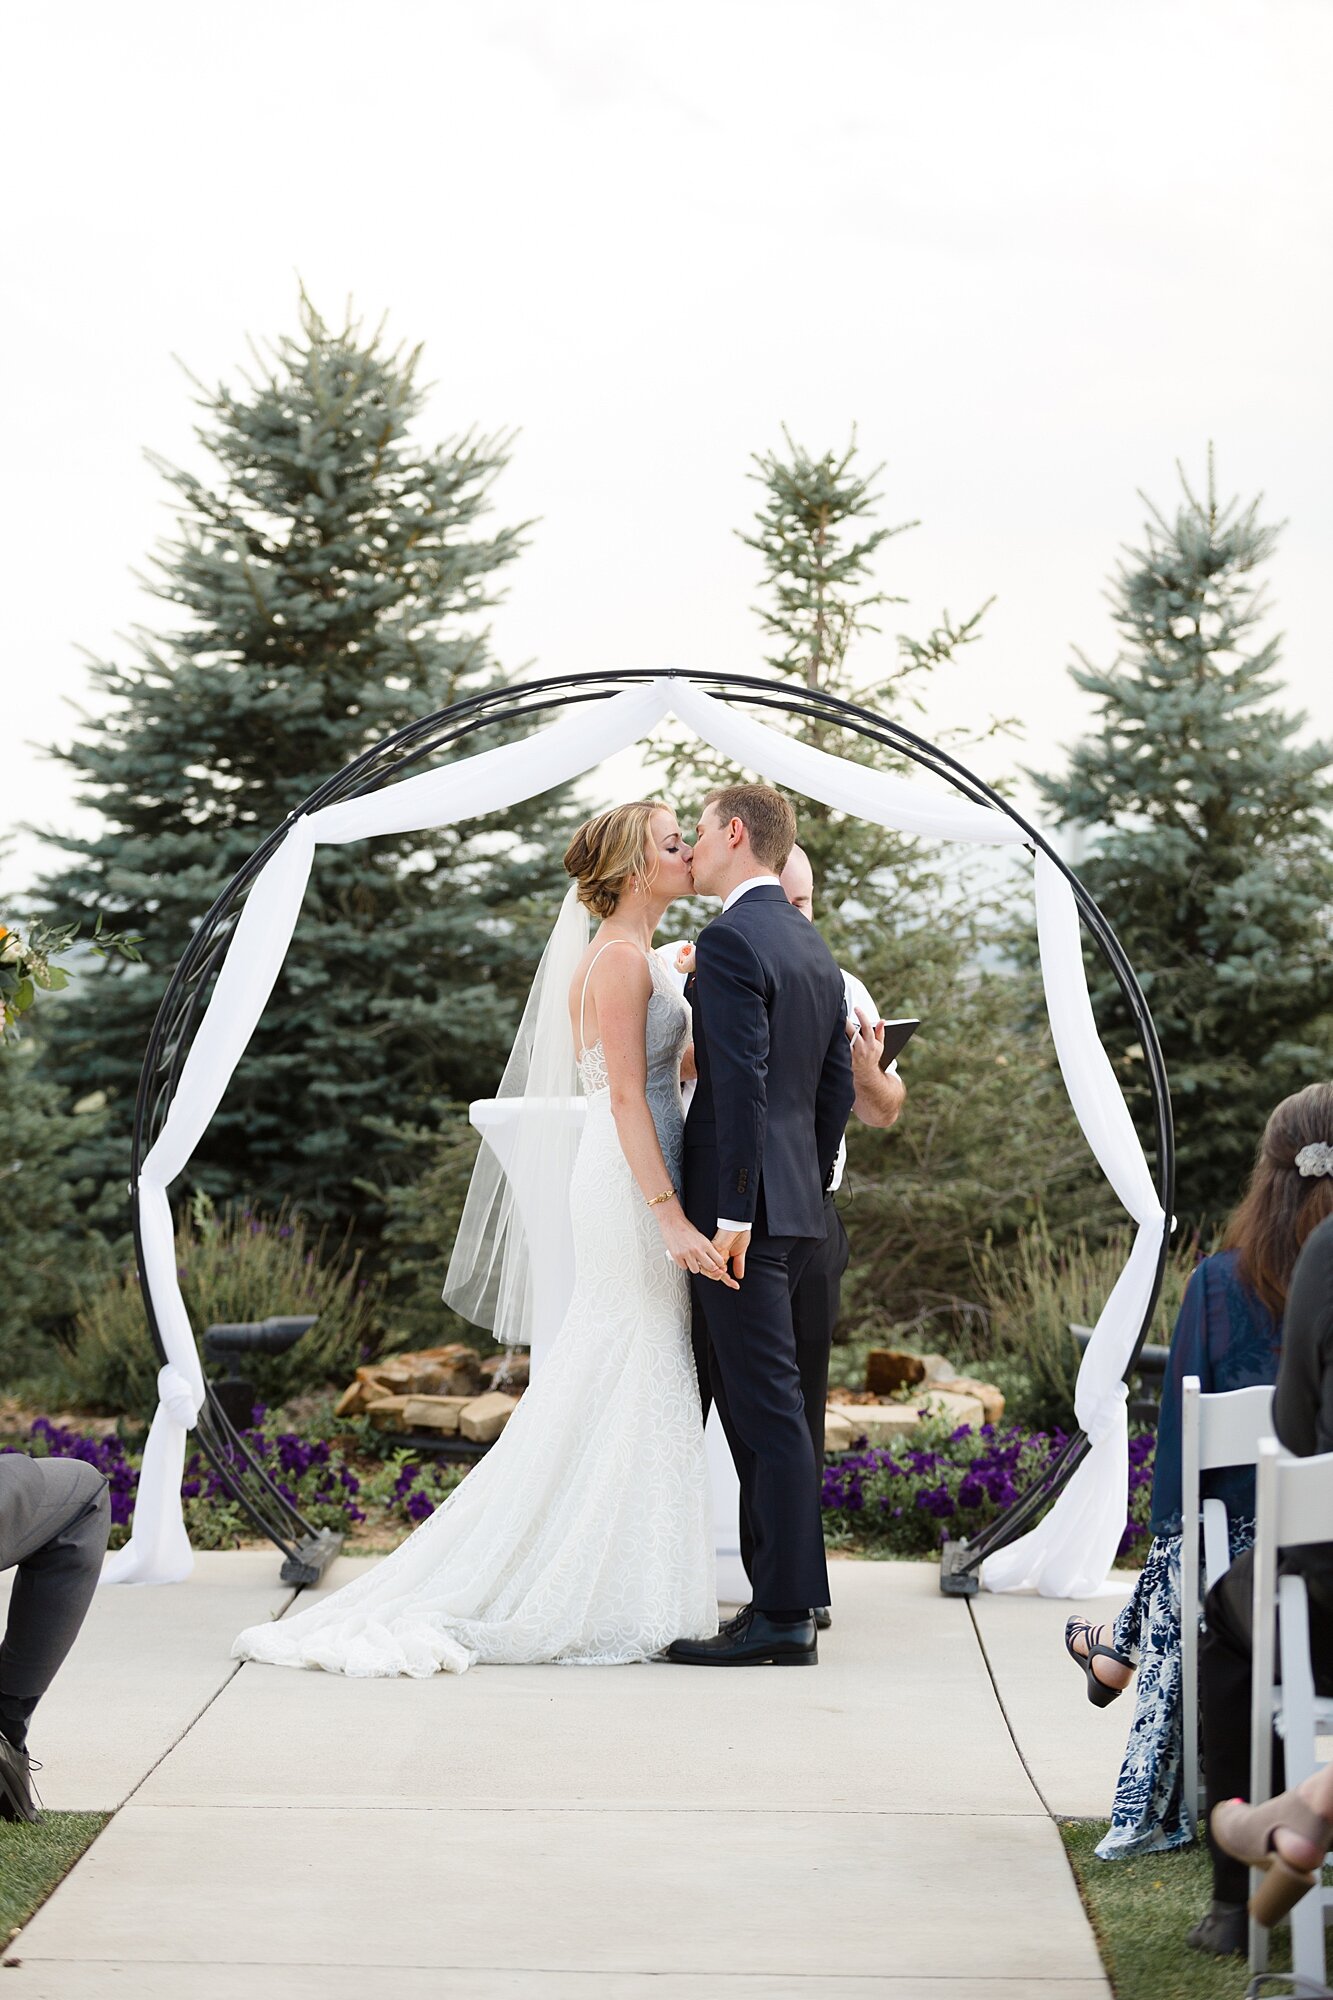 Kristen Vance Photography - Windsong Estate Wedding - Fort Collins, Colorado